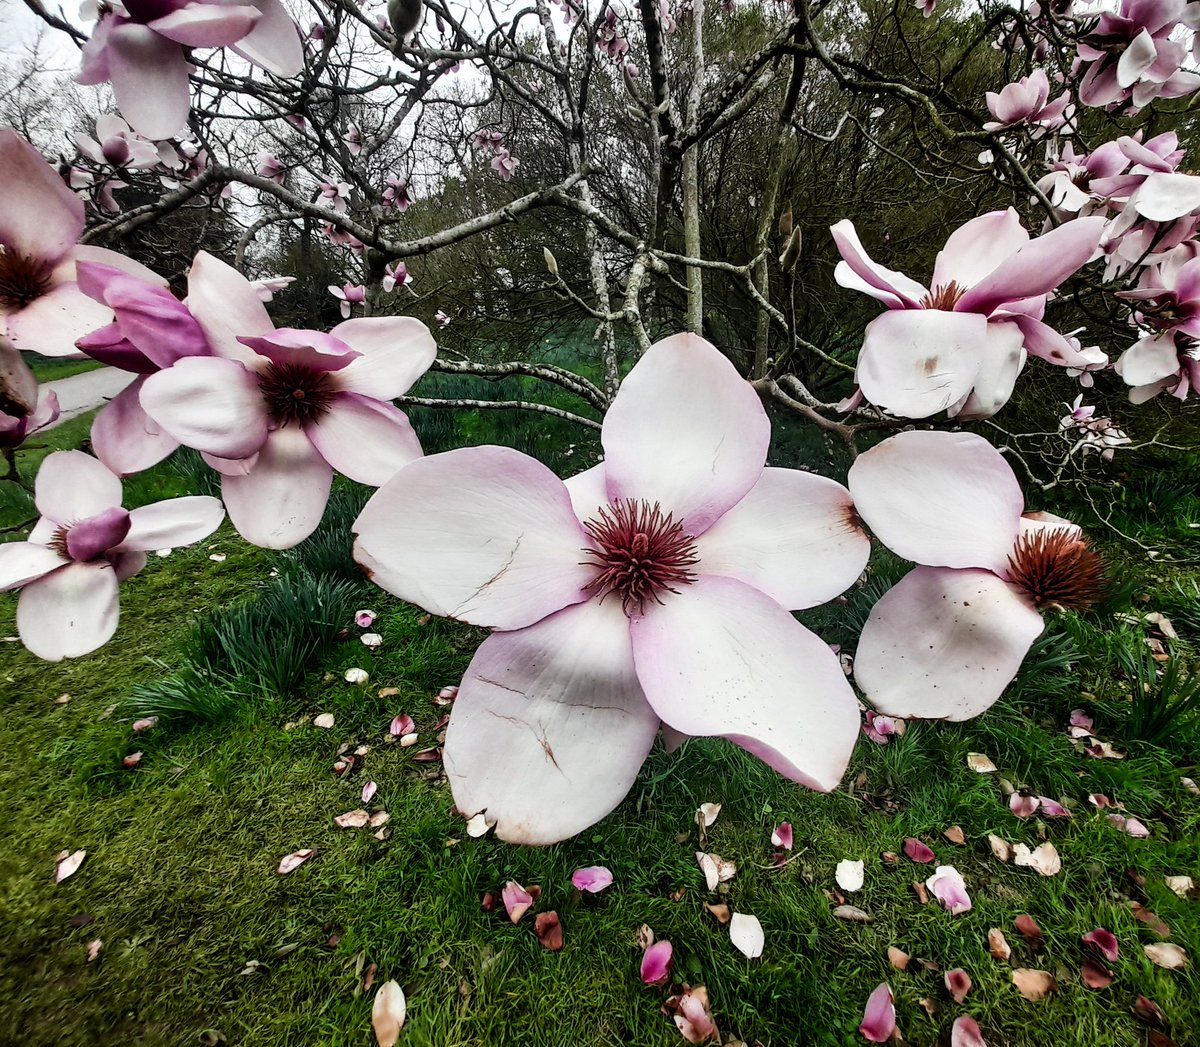 Majestic magnolia